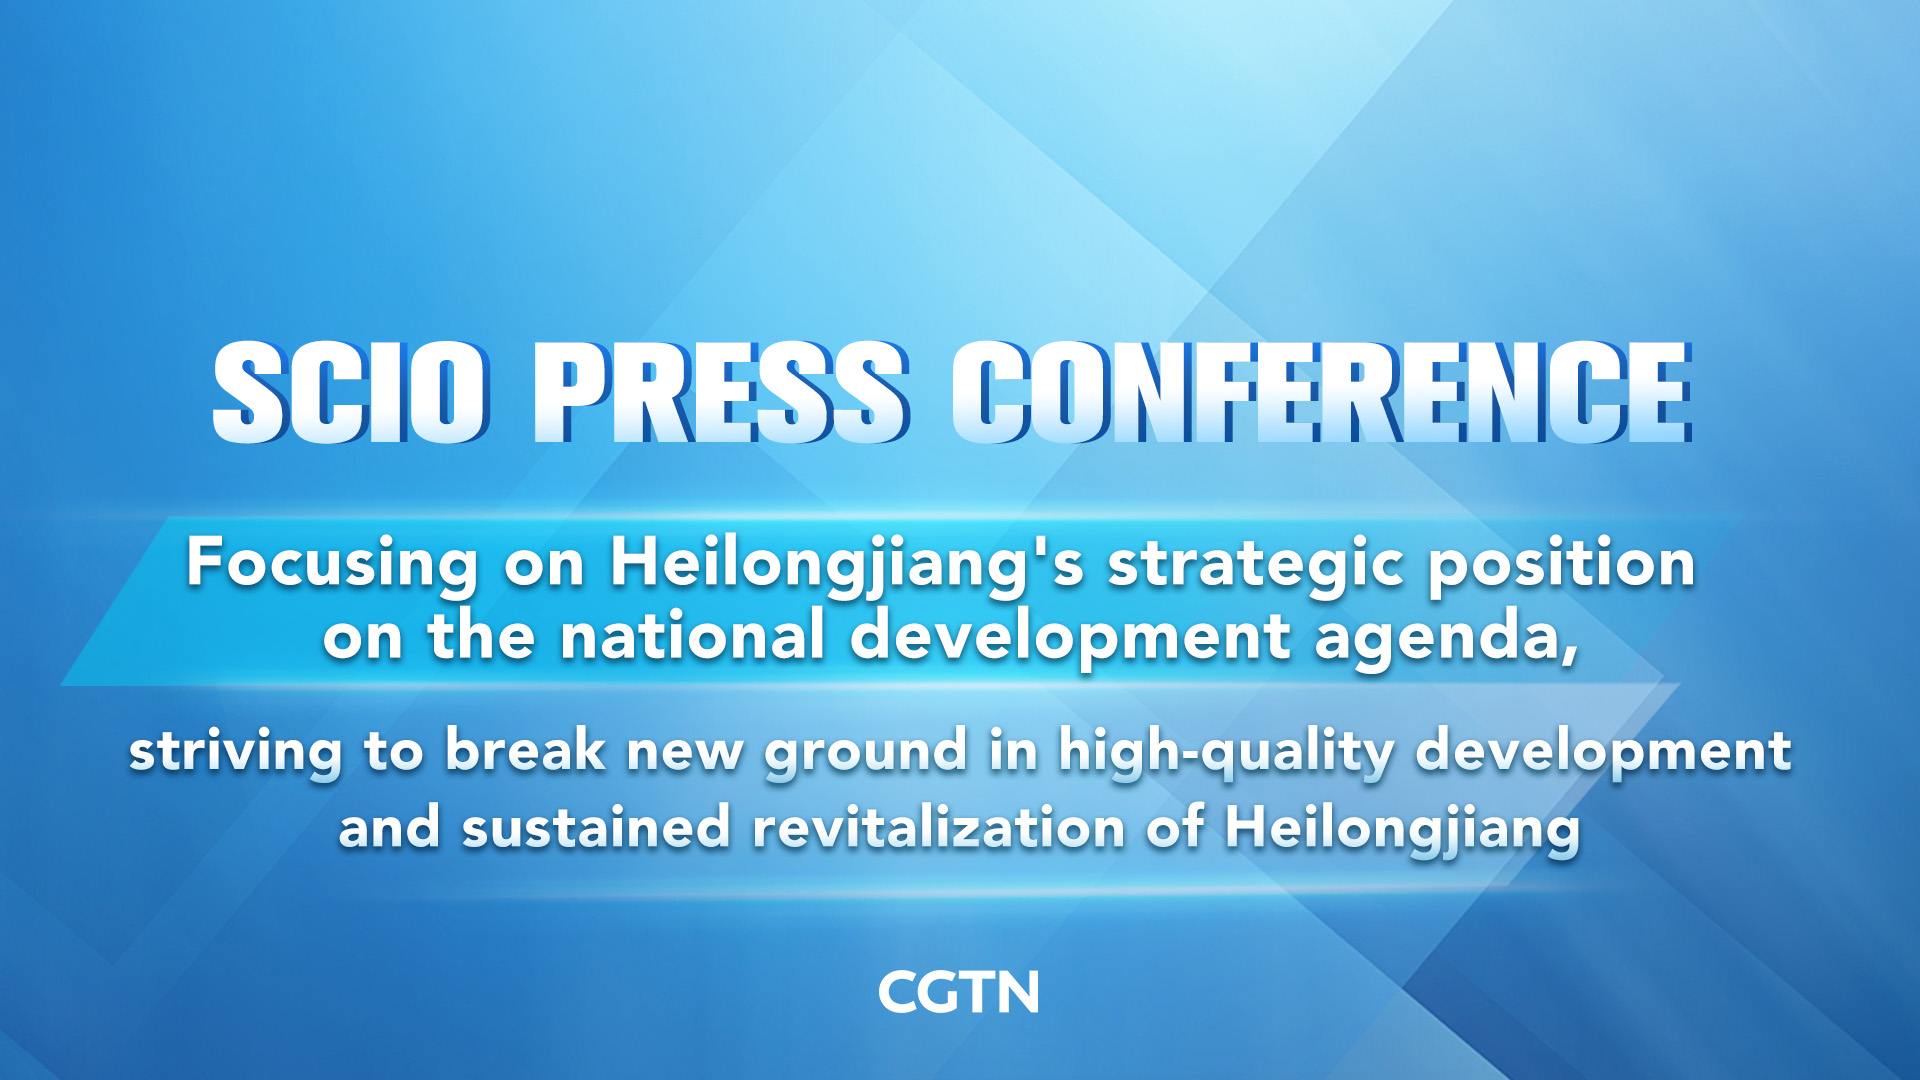 Live: Heilongjiang's position in national development agenda